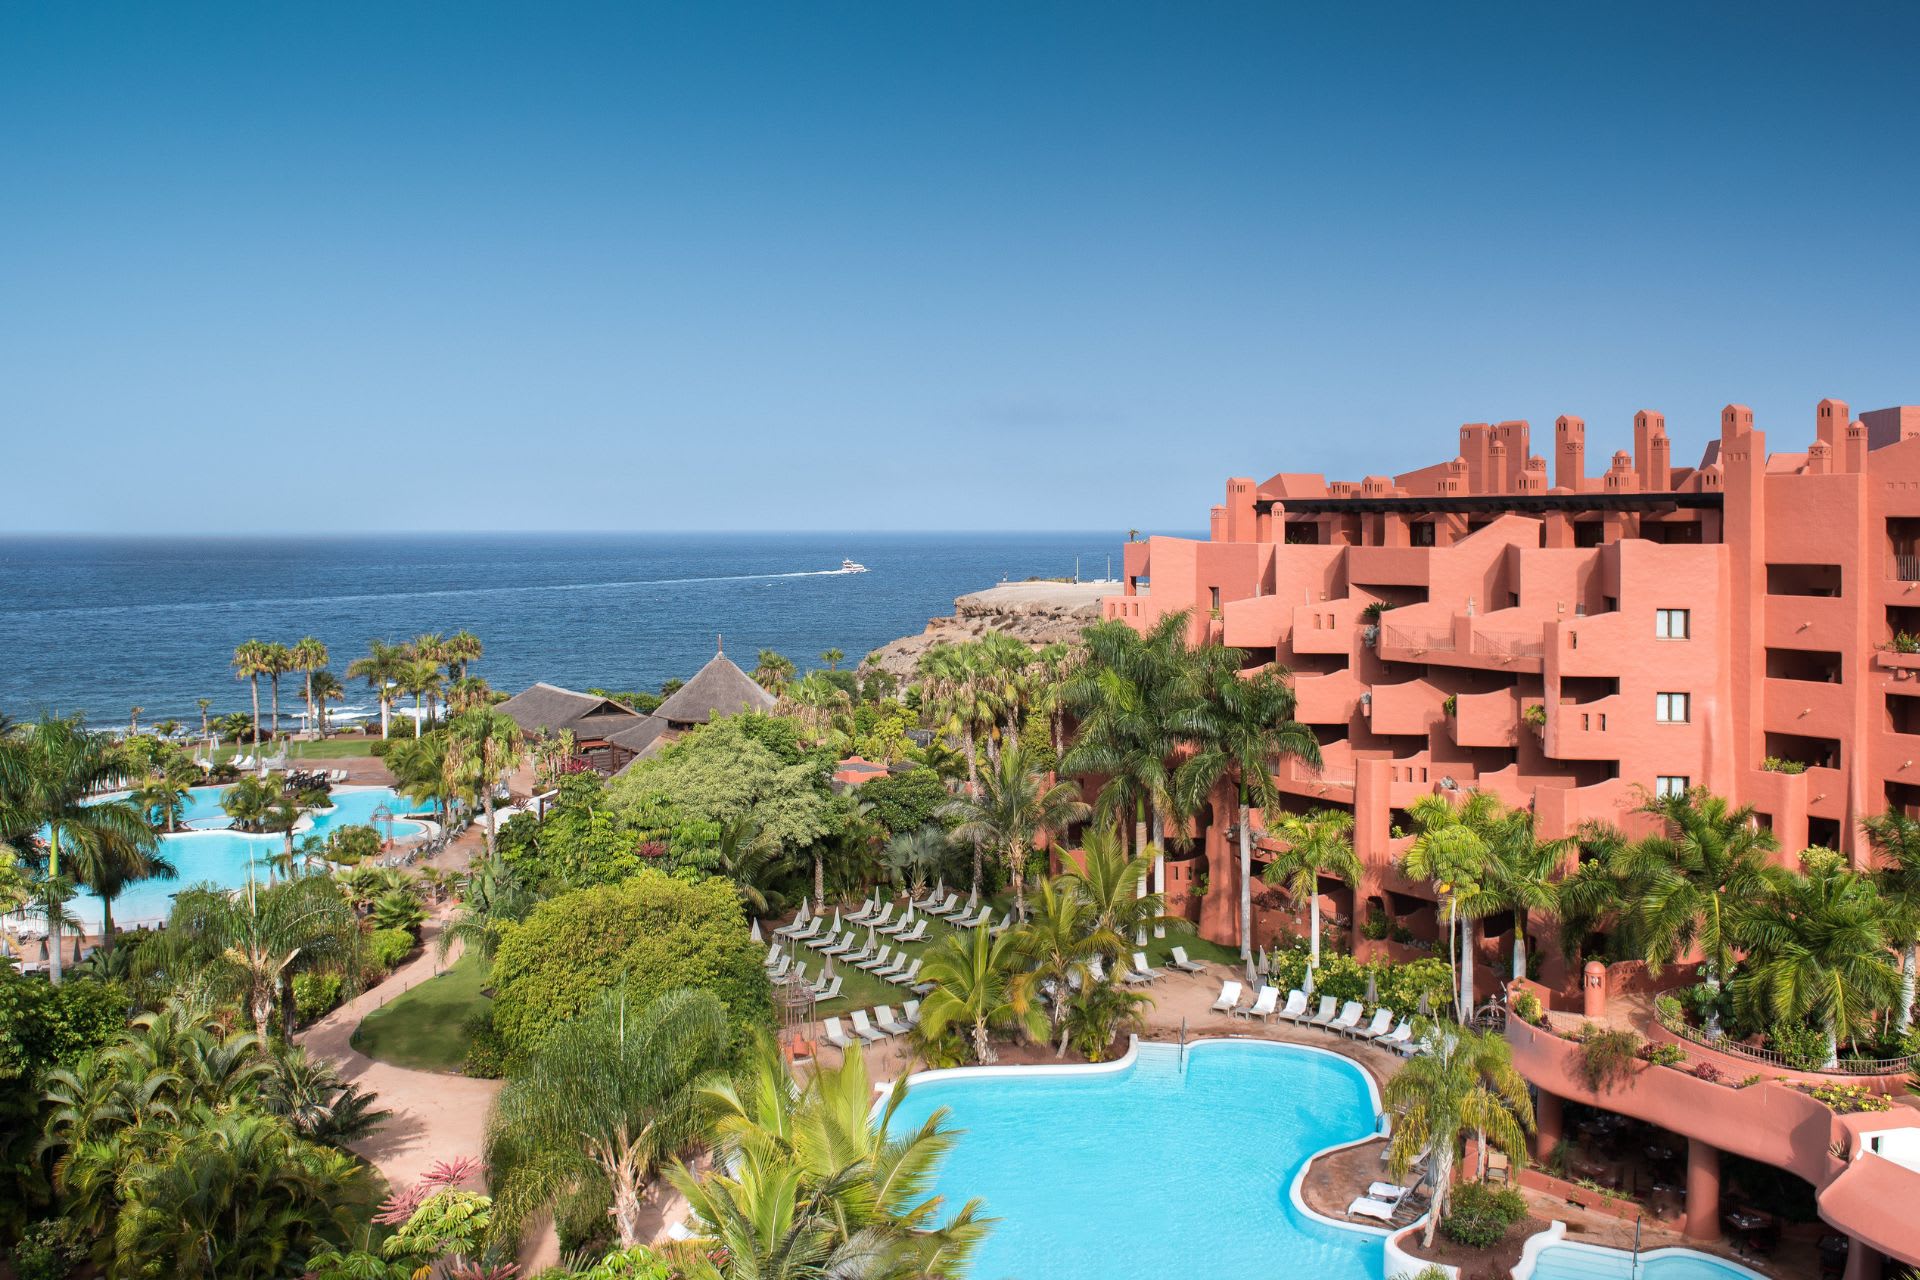 Tivoli La Caleta Tenerife Resort | 5-Star Hotel in Tenerife Spain